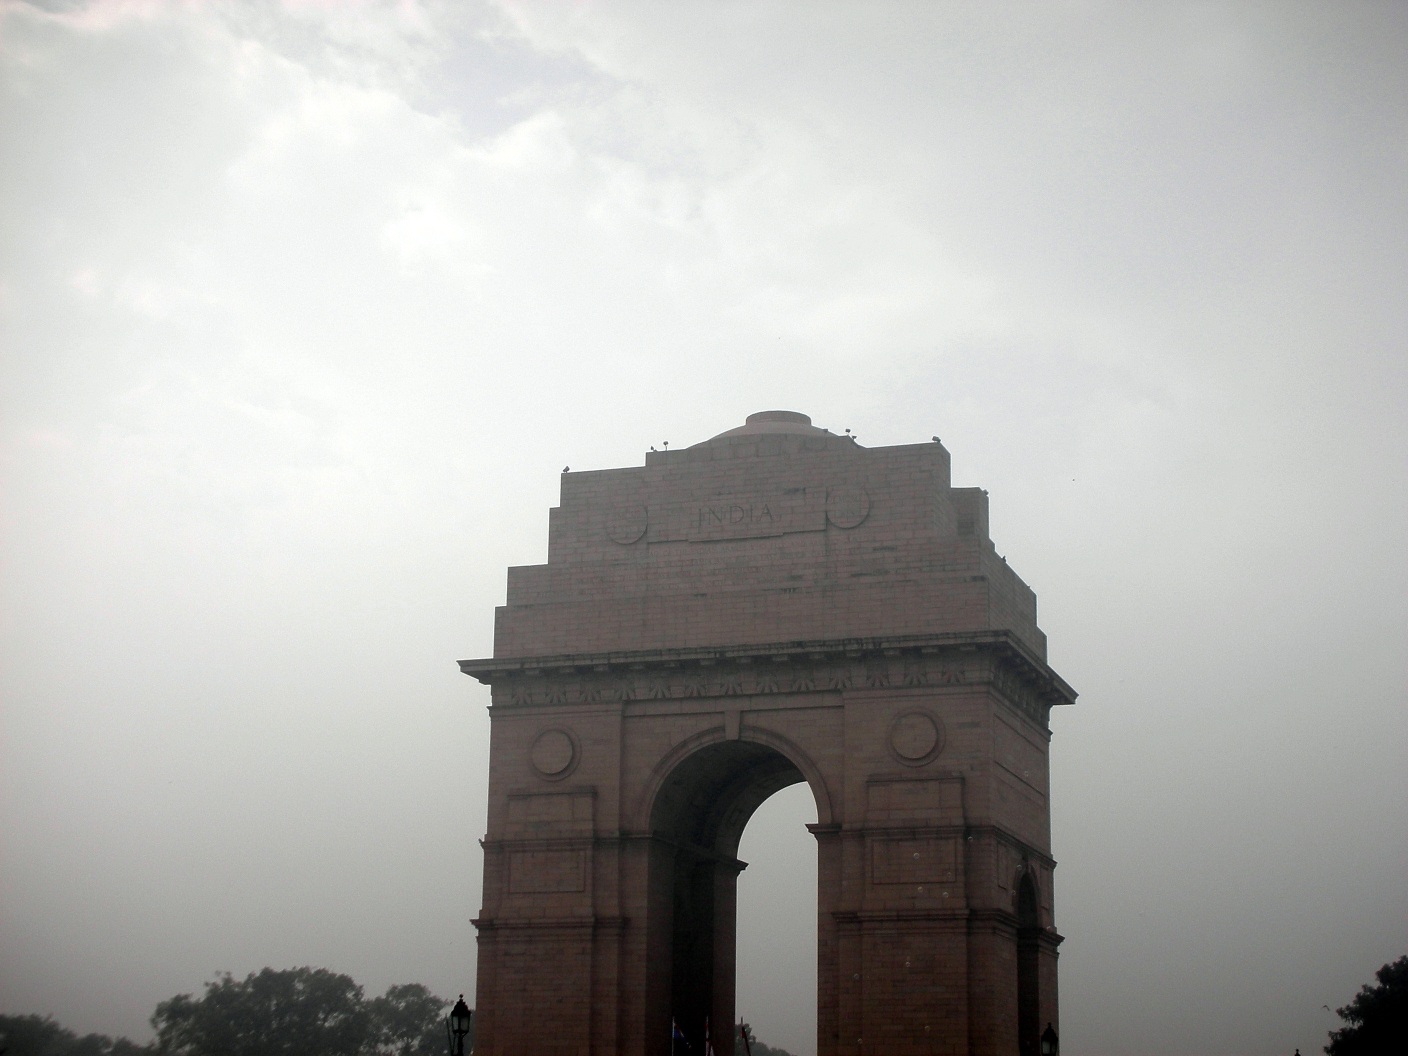 © Santosh Kumar - Majestic India gate